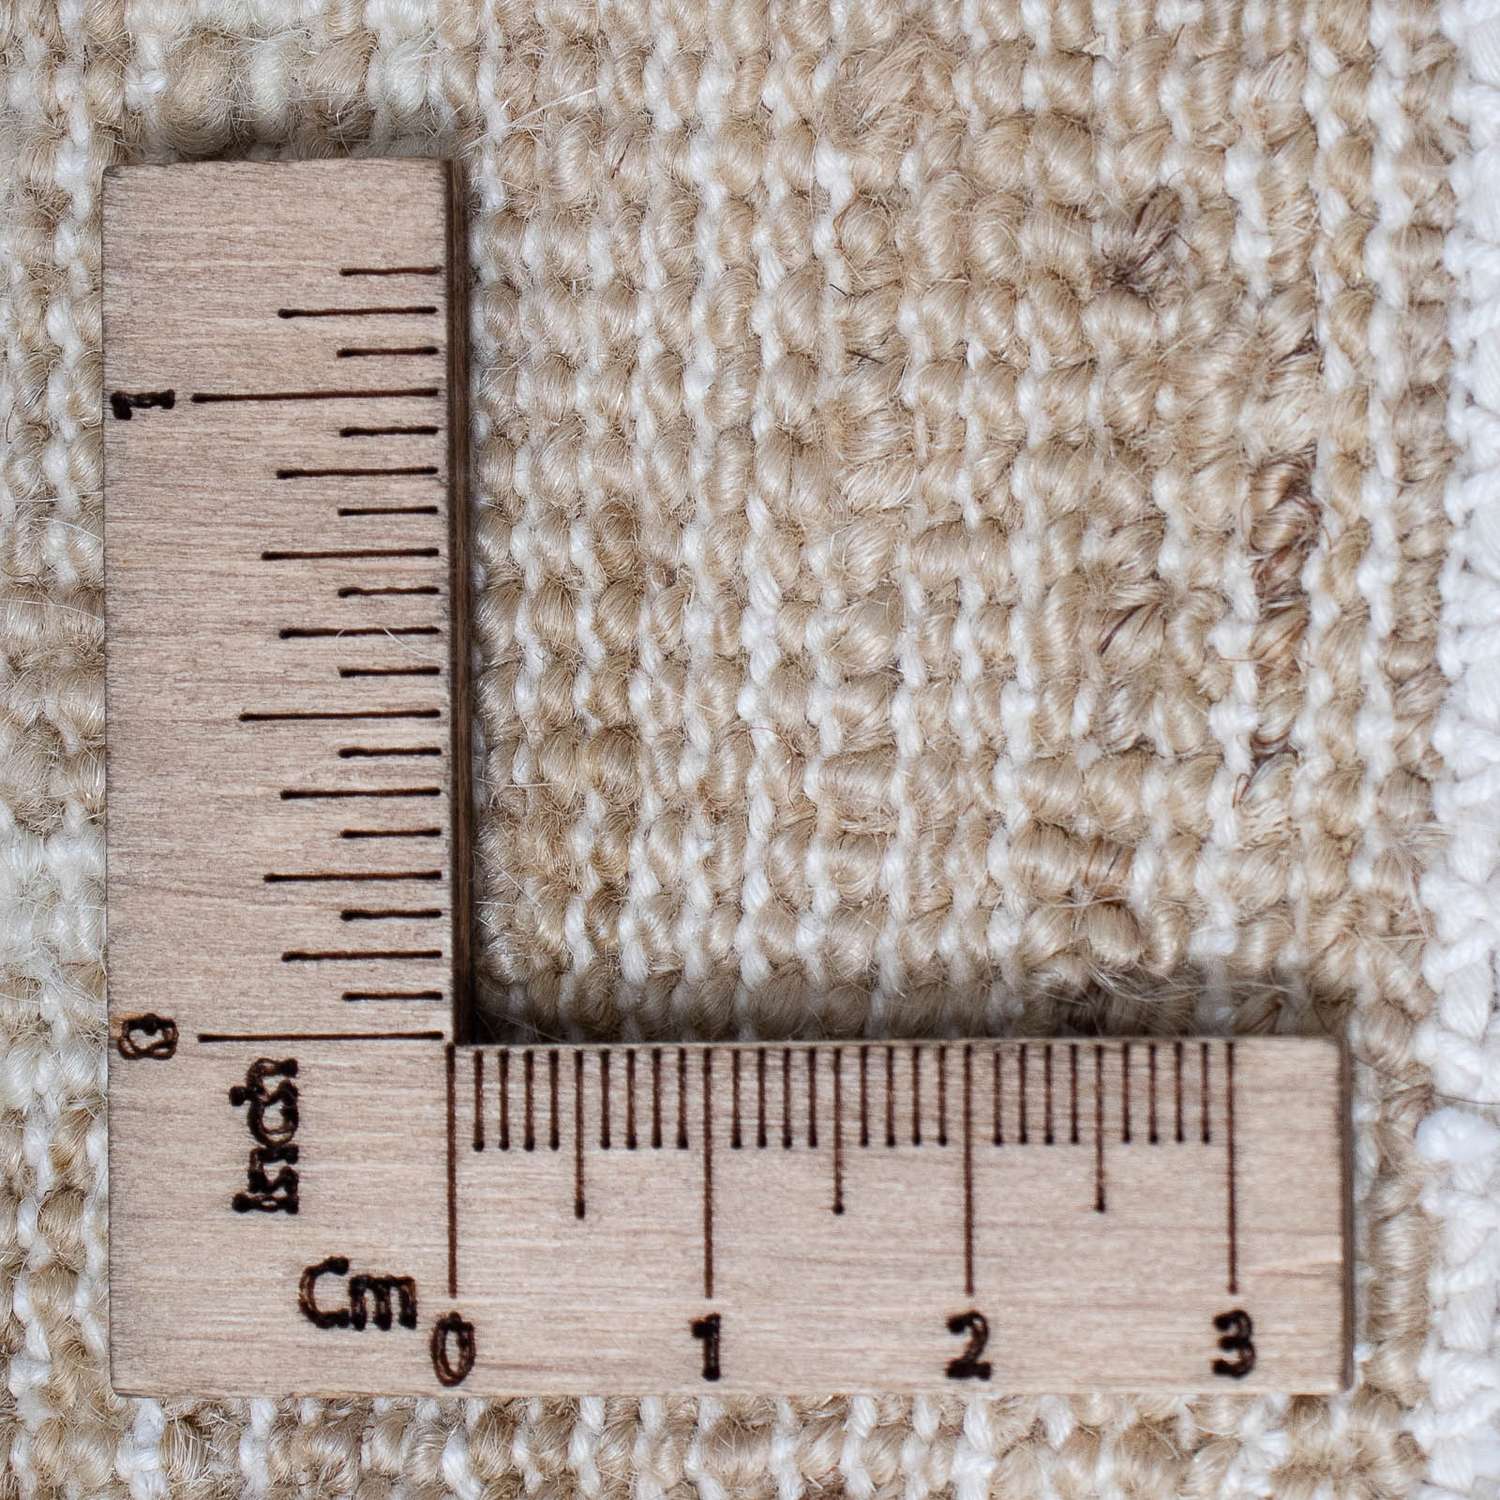 Ziegler Carpet - 346 x 245 cm - beige